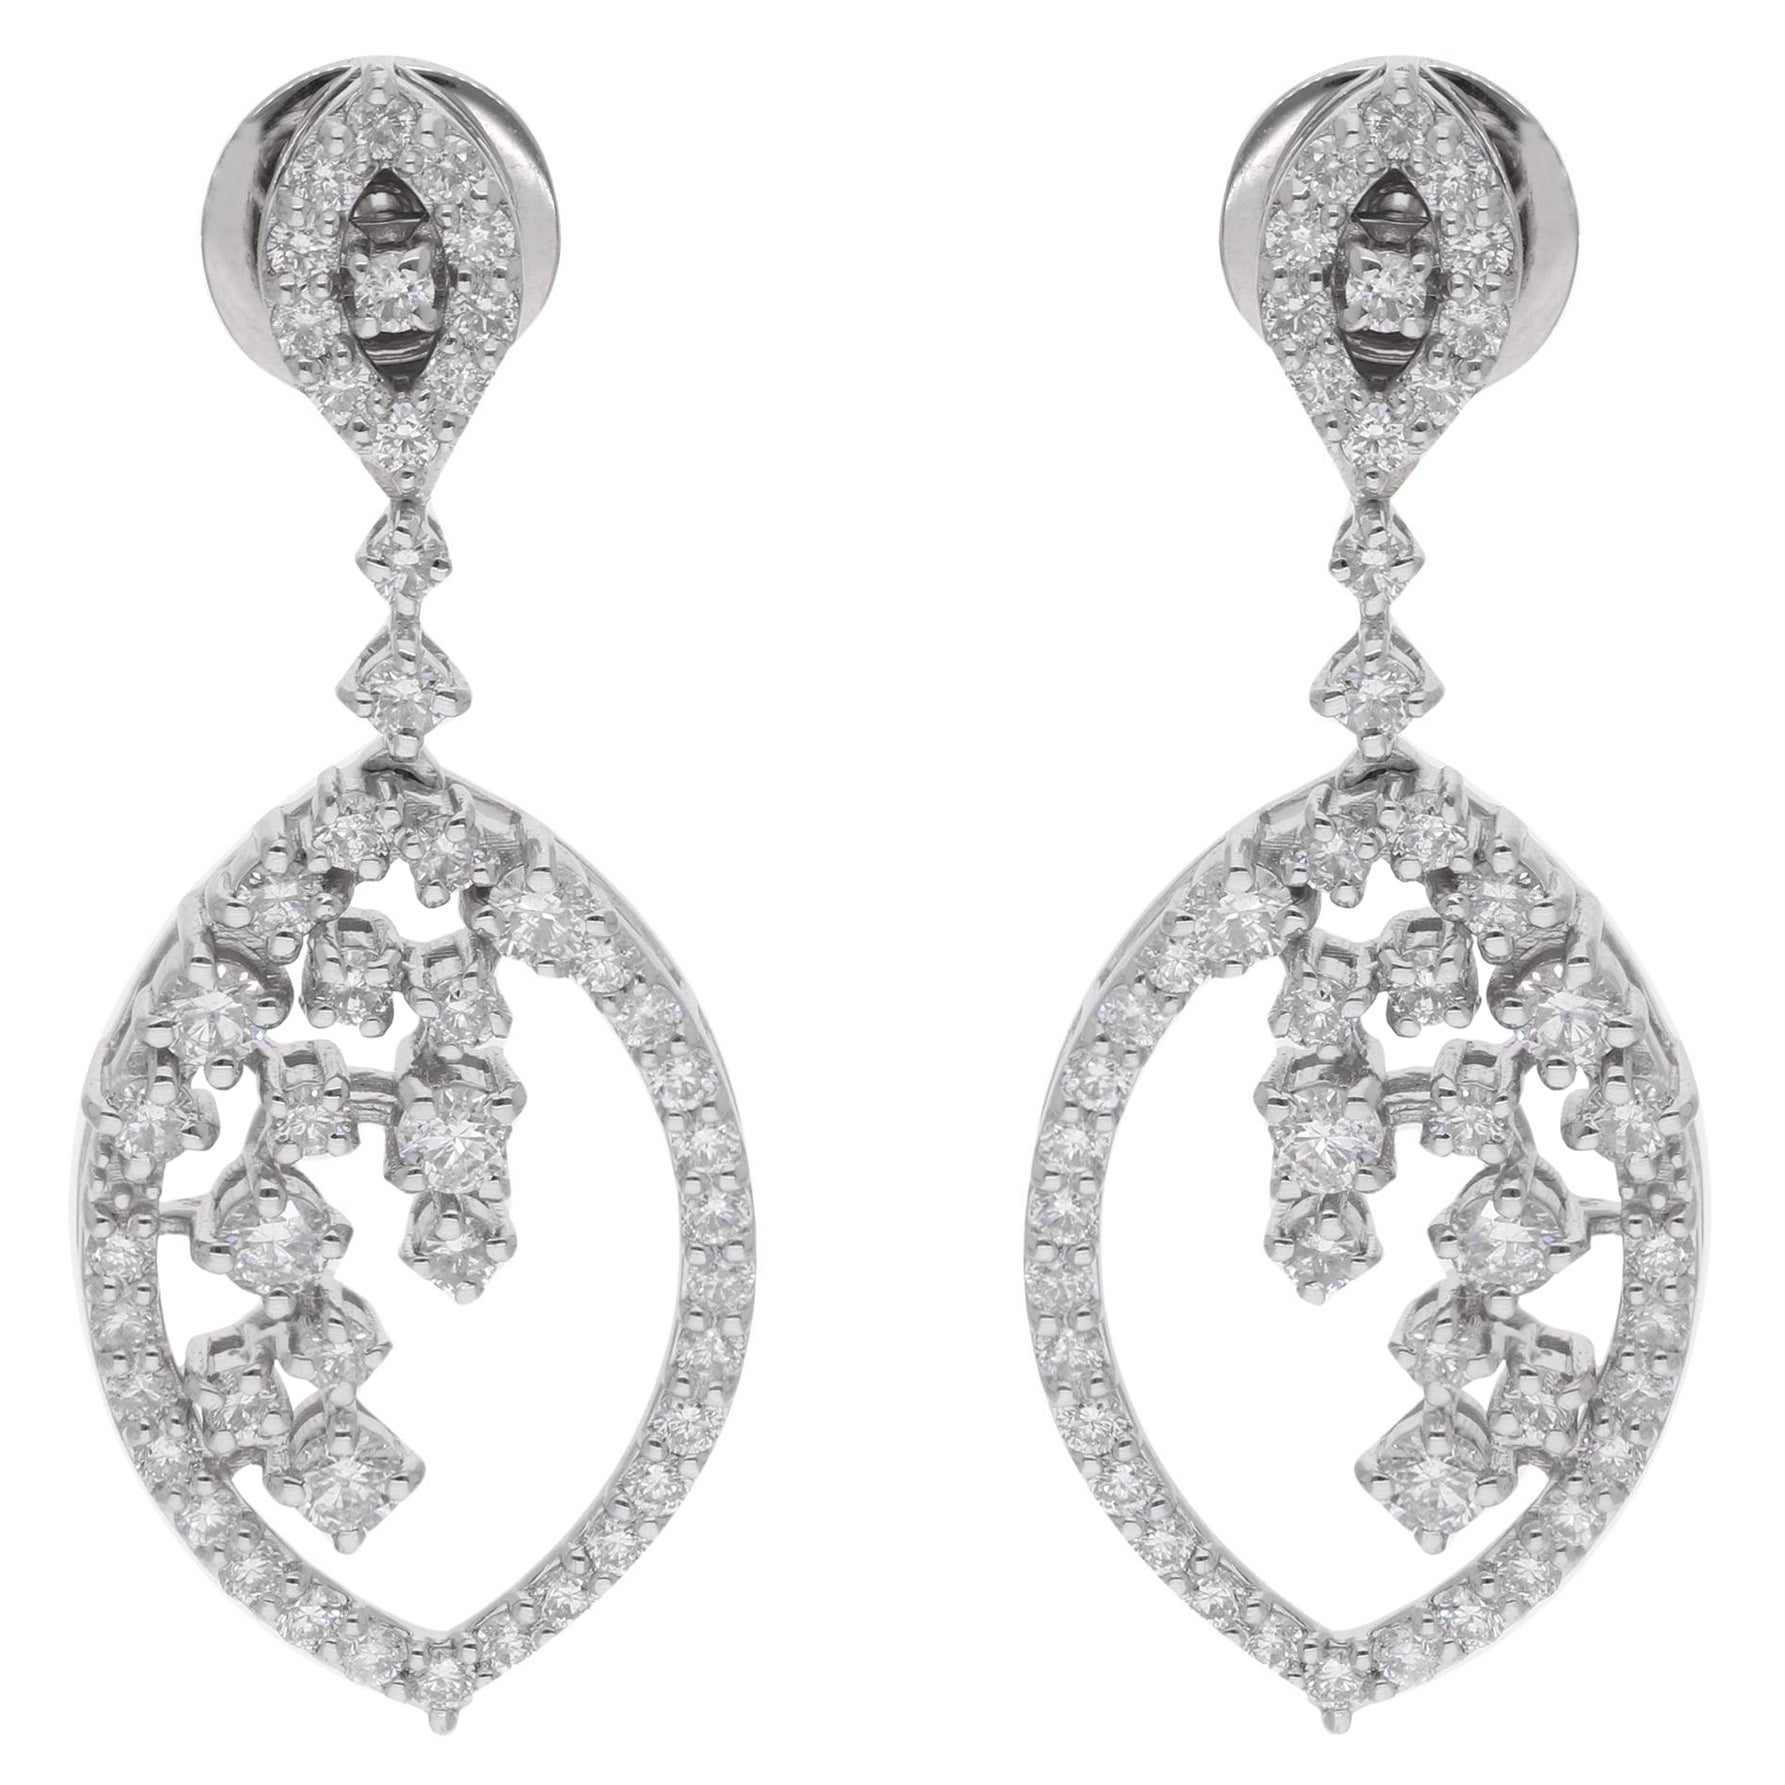 Natural 1.60 Carat Round Diamond Dangle Earrings 14 Karat White Gold Jewelry